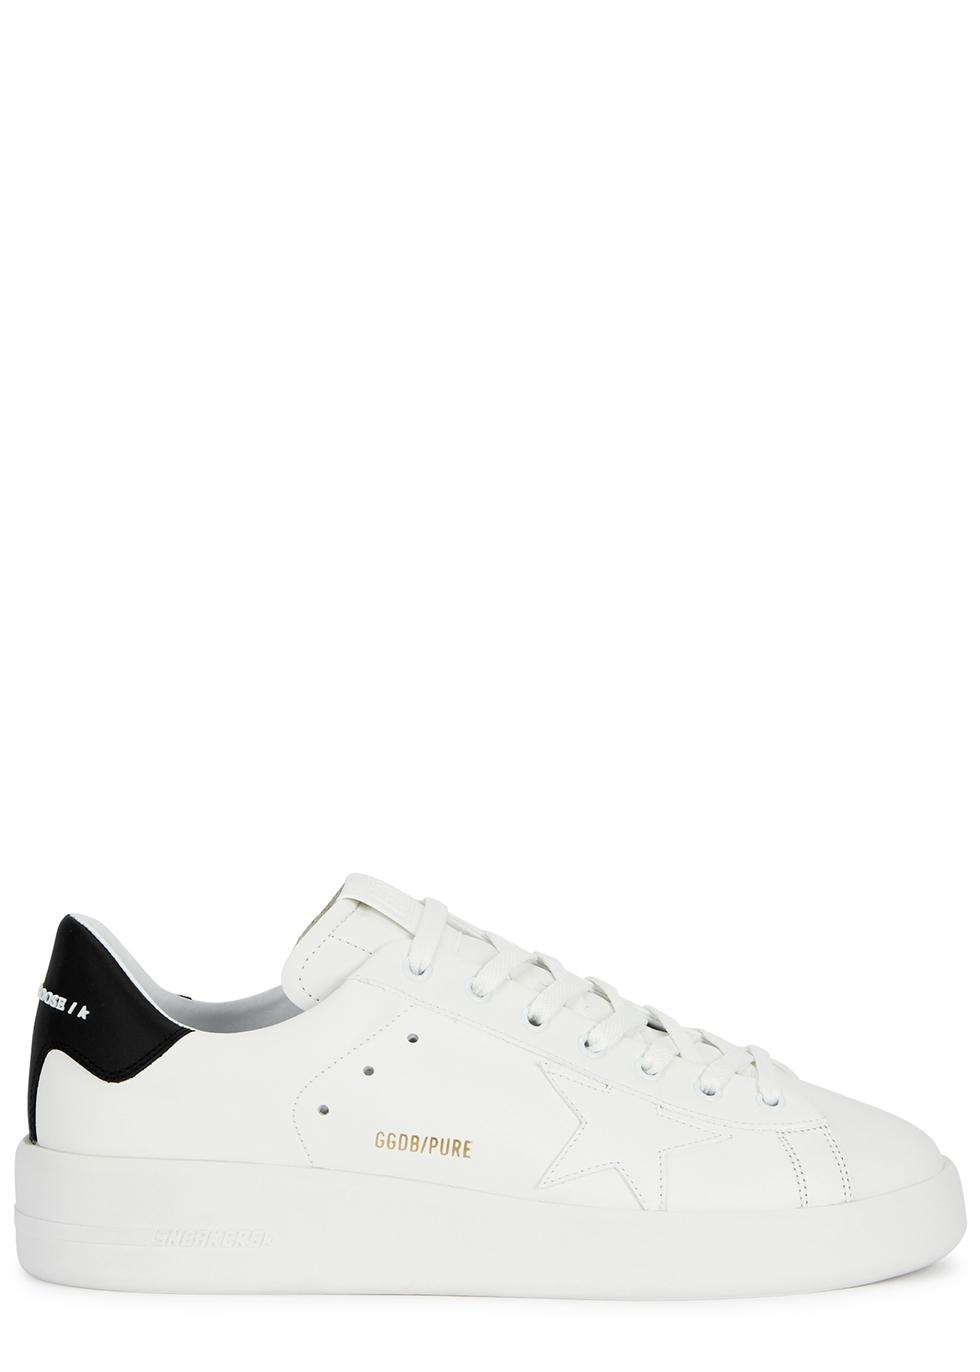 Golden Goose Deluxe Brand Purestar 40 White Leather Sneakers for Men - Lyst